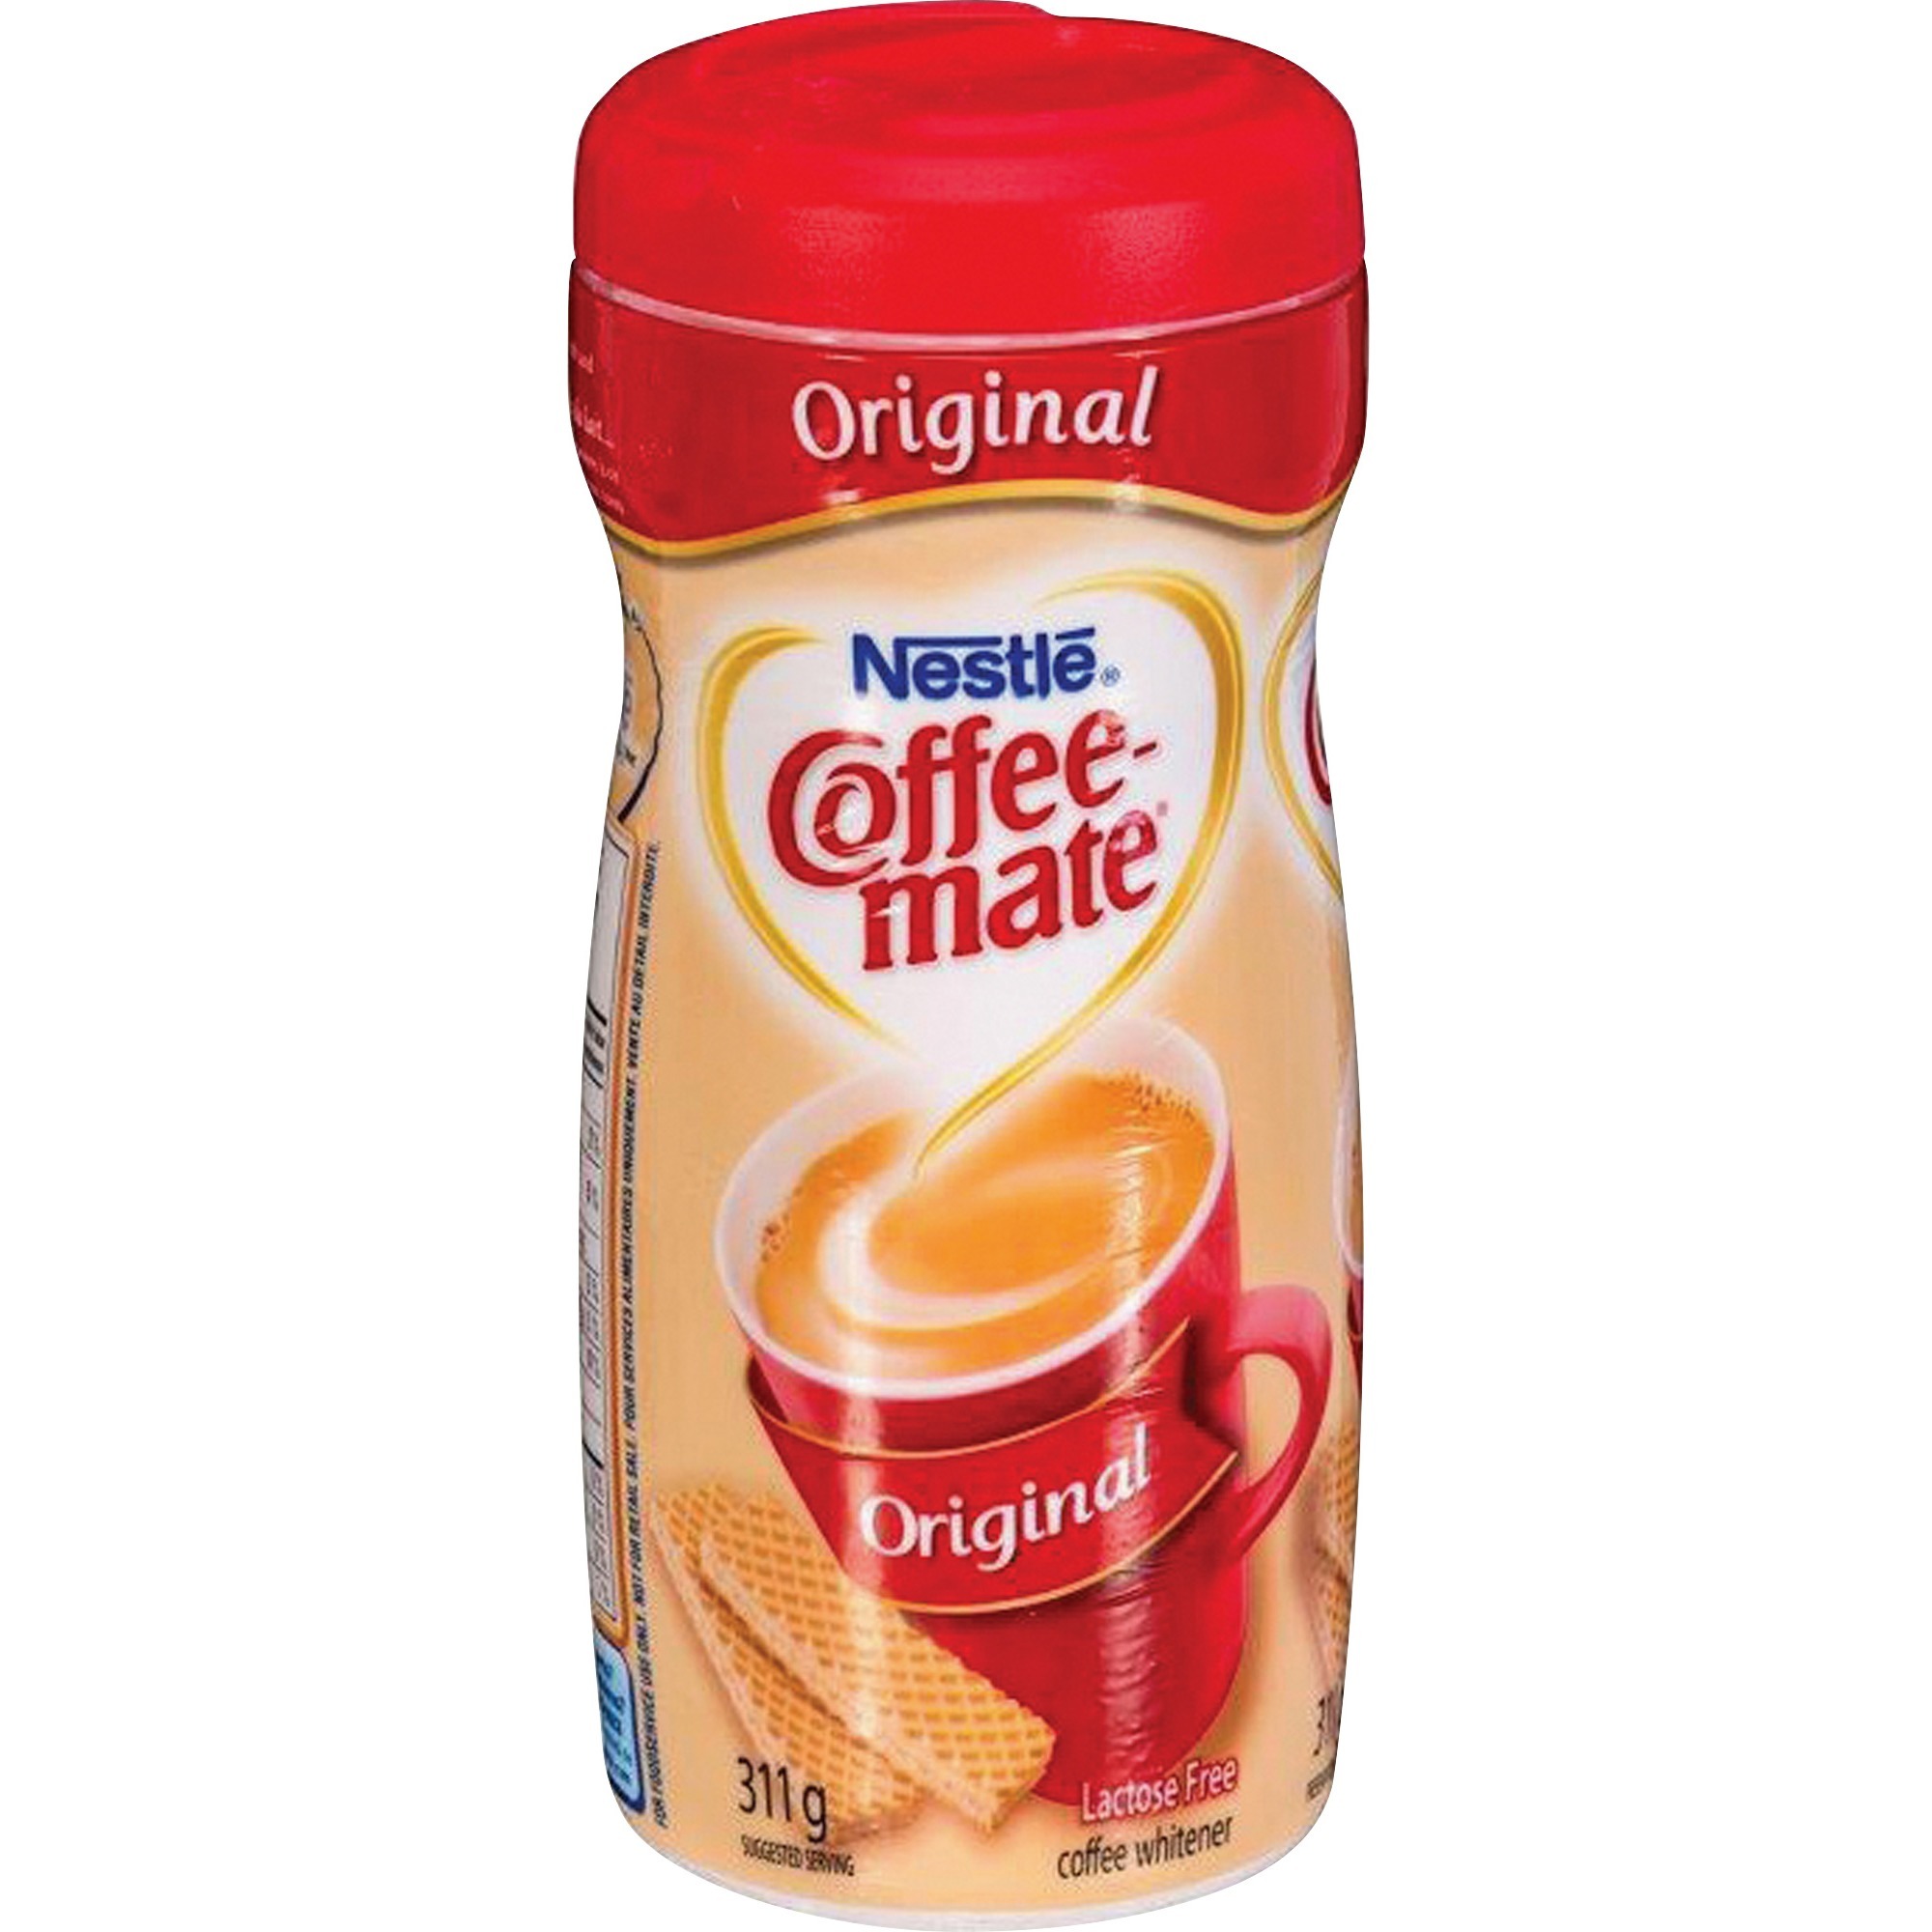 Coffee mate Original Creamer - 311 g - Each